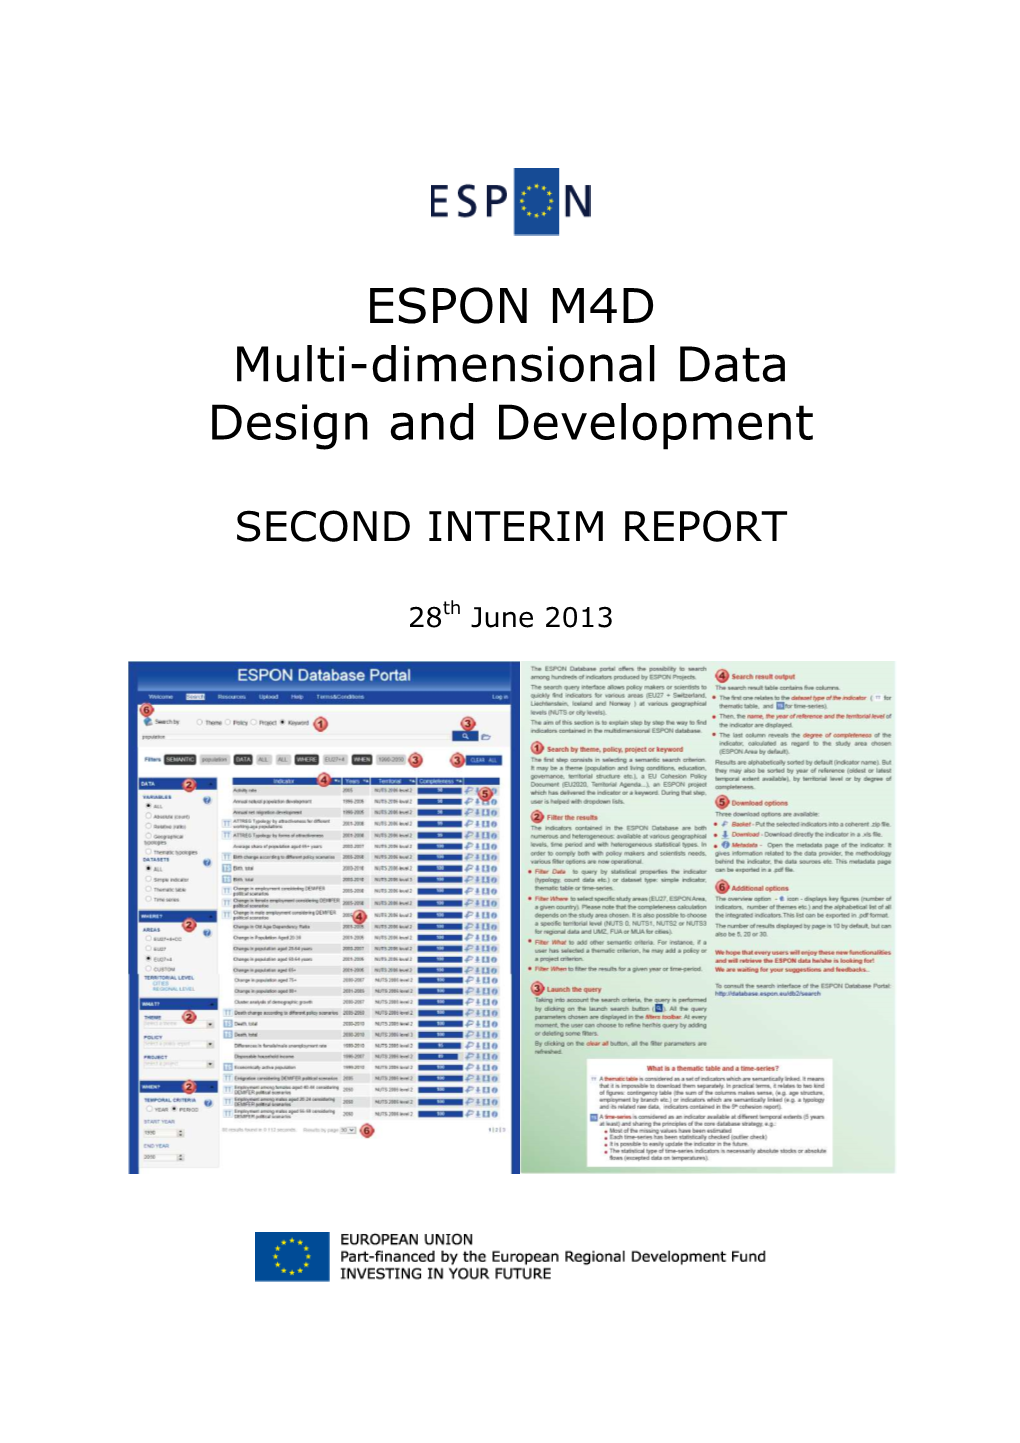 ESPON M4D Multi-Dimensional Data Design and Development